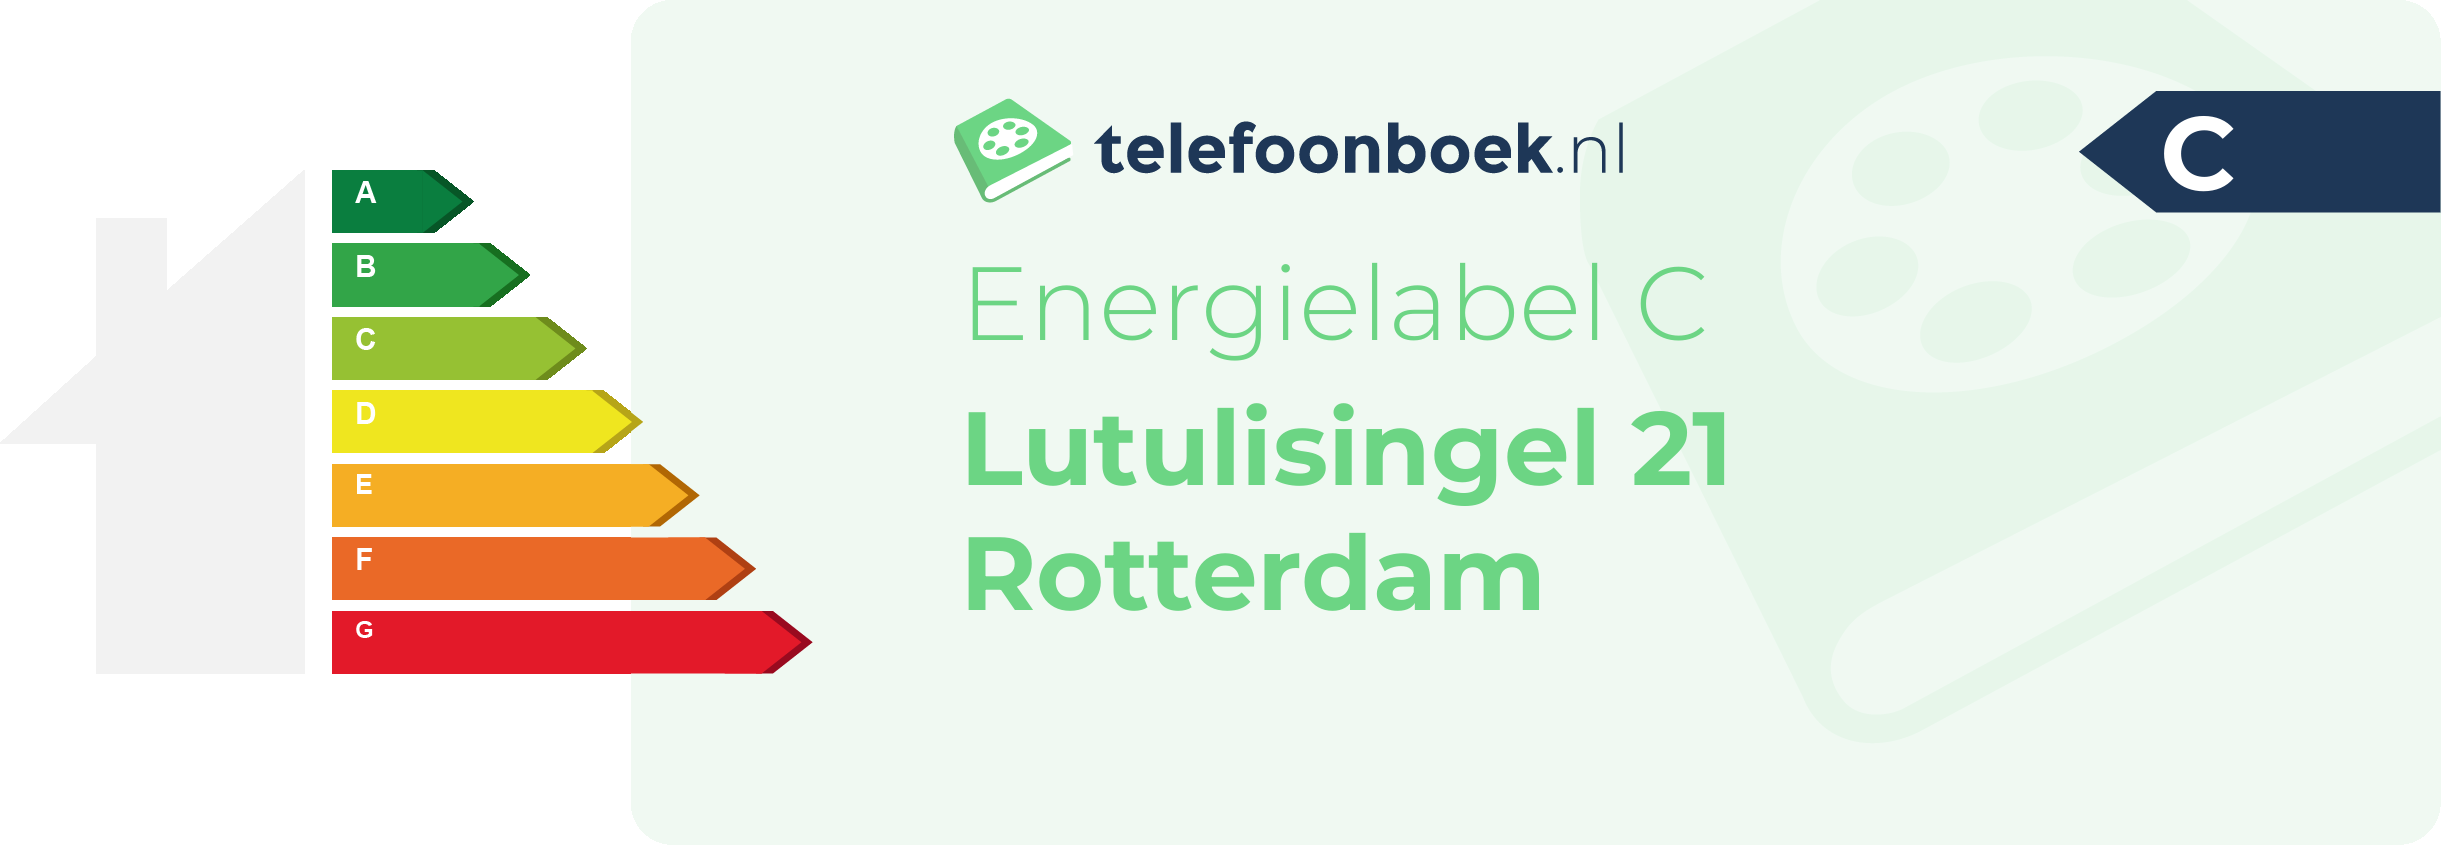 Energielabel Lutulisingel 21 Rotterdam